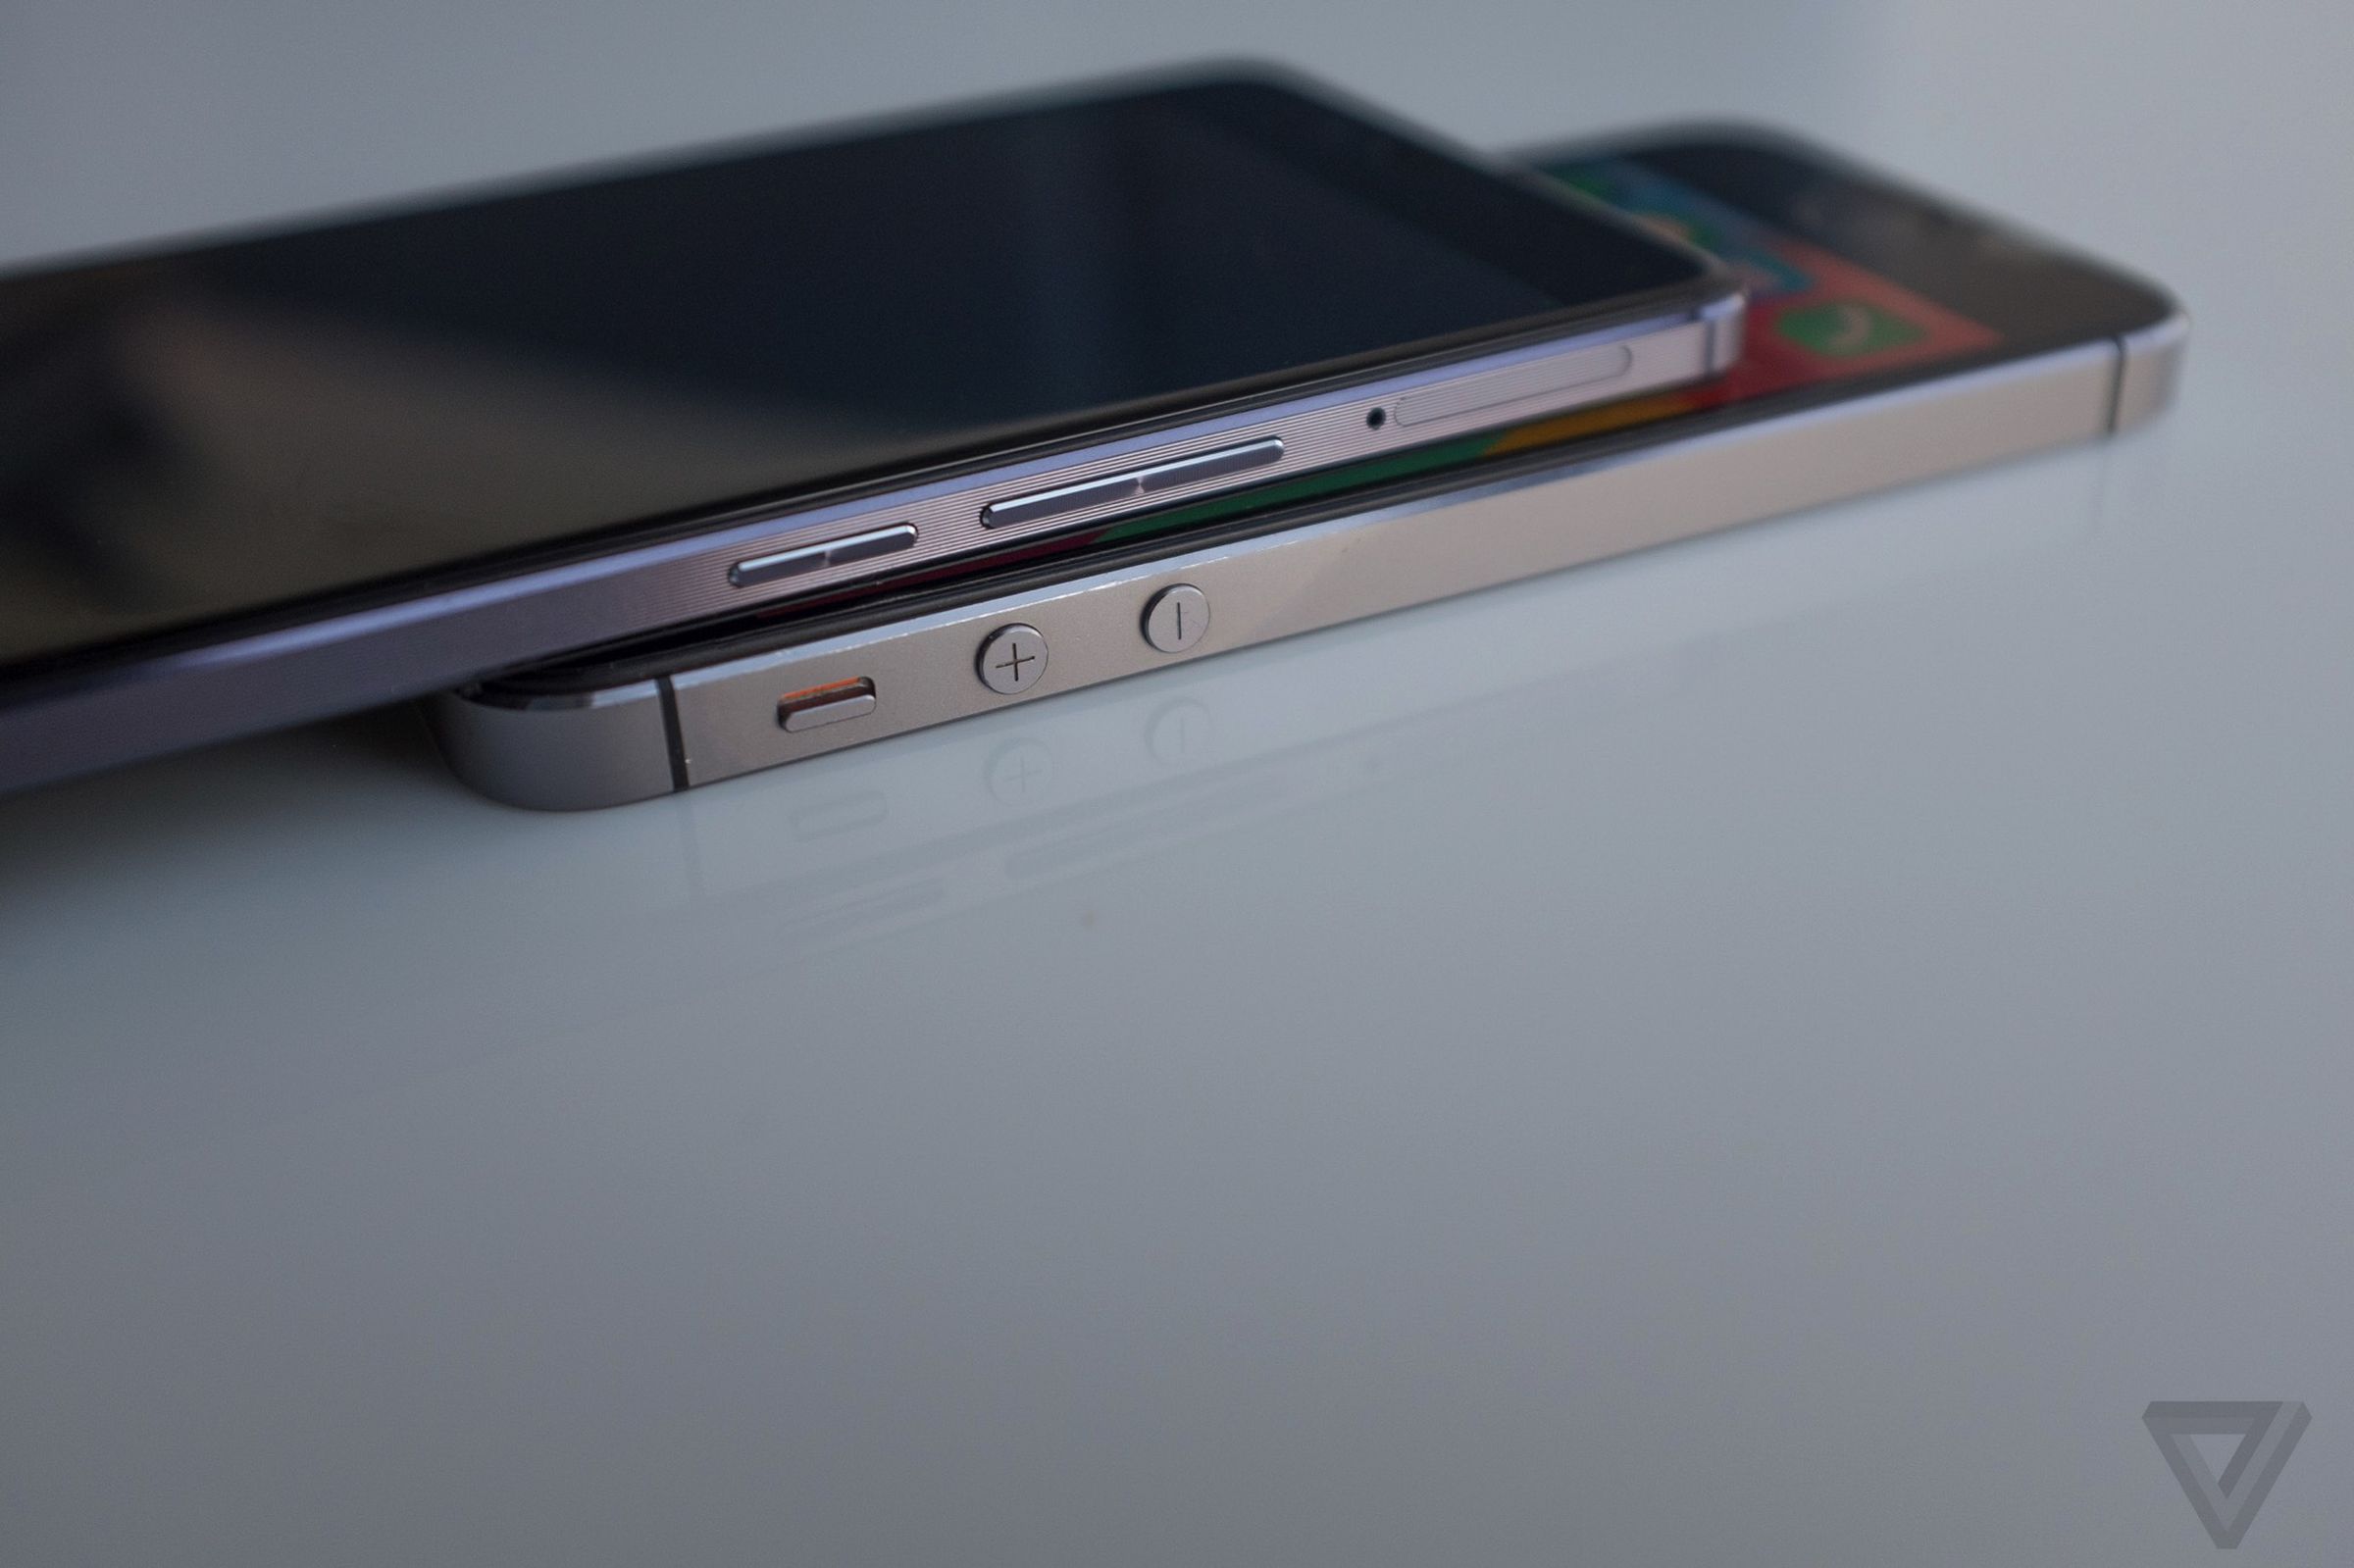 OnePlus X, meet iPhone 5S